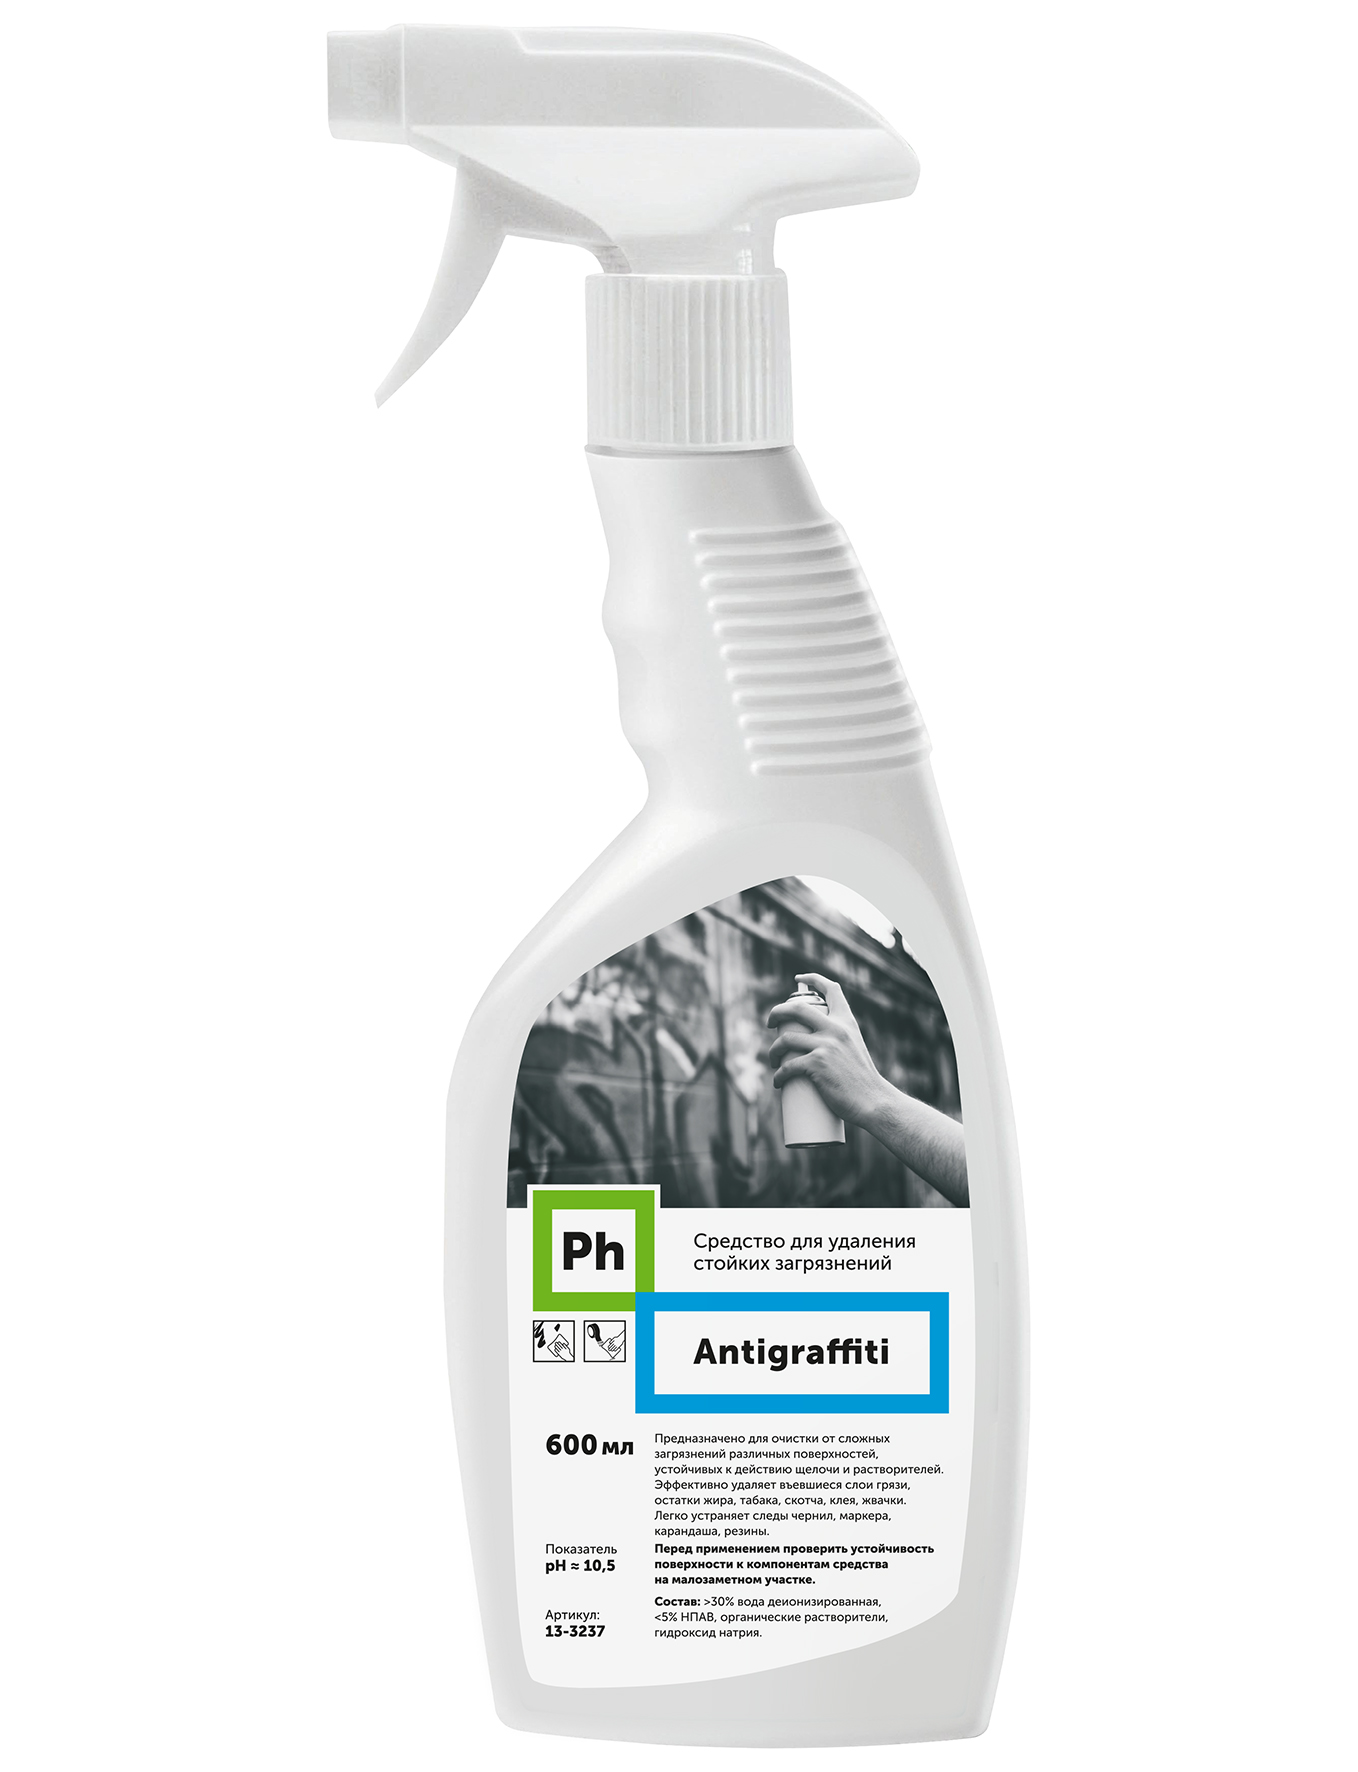 Чистящее средство Ph Средство для удаления для удаления въевшихся и сложных загрязнений Antigraffiti 600 мл - фото 1